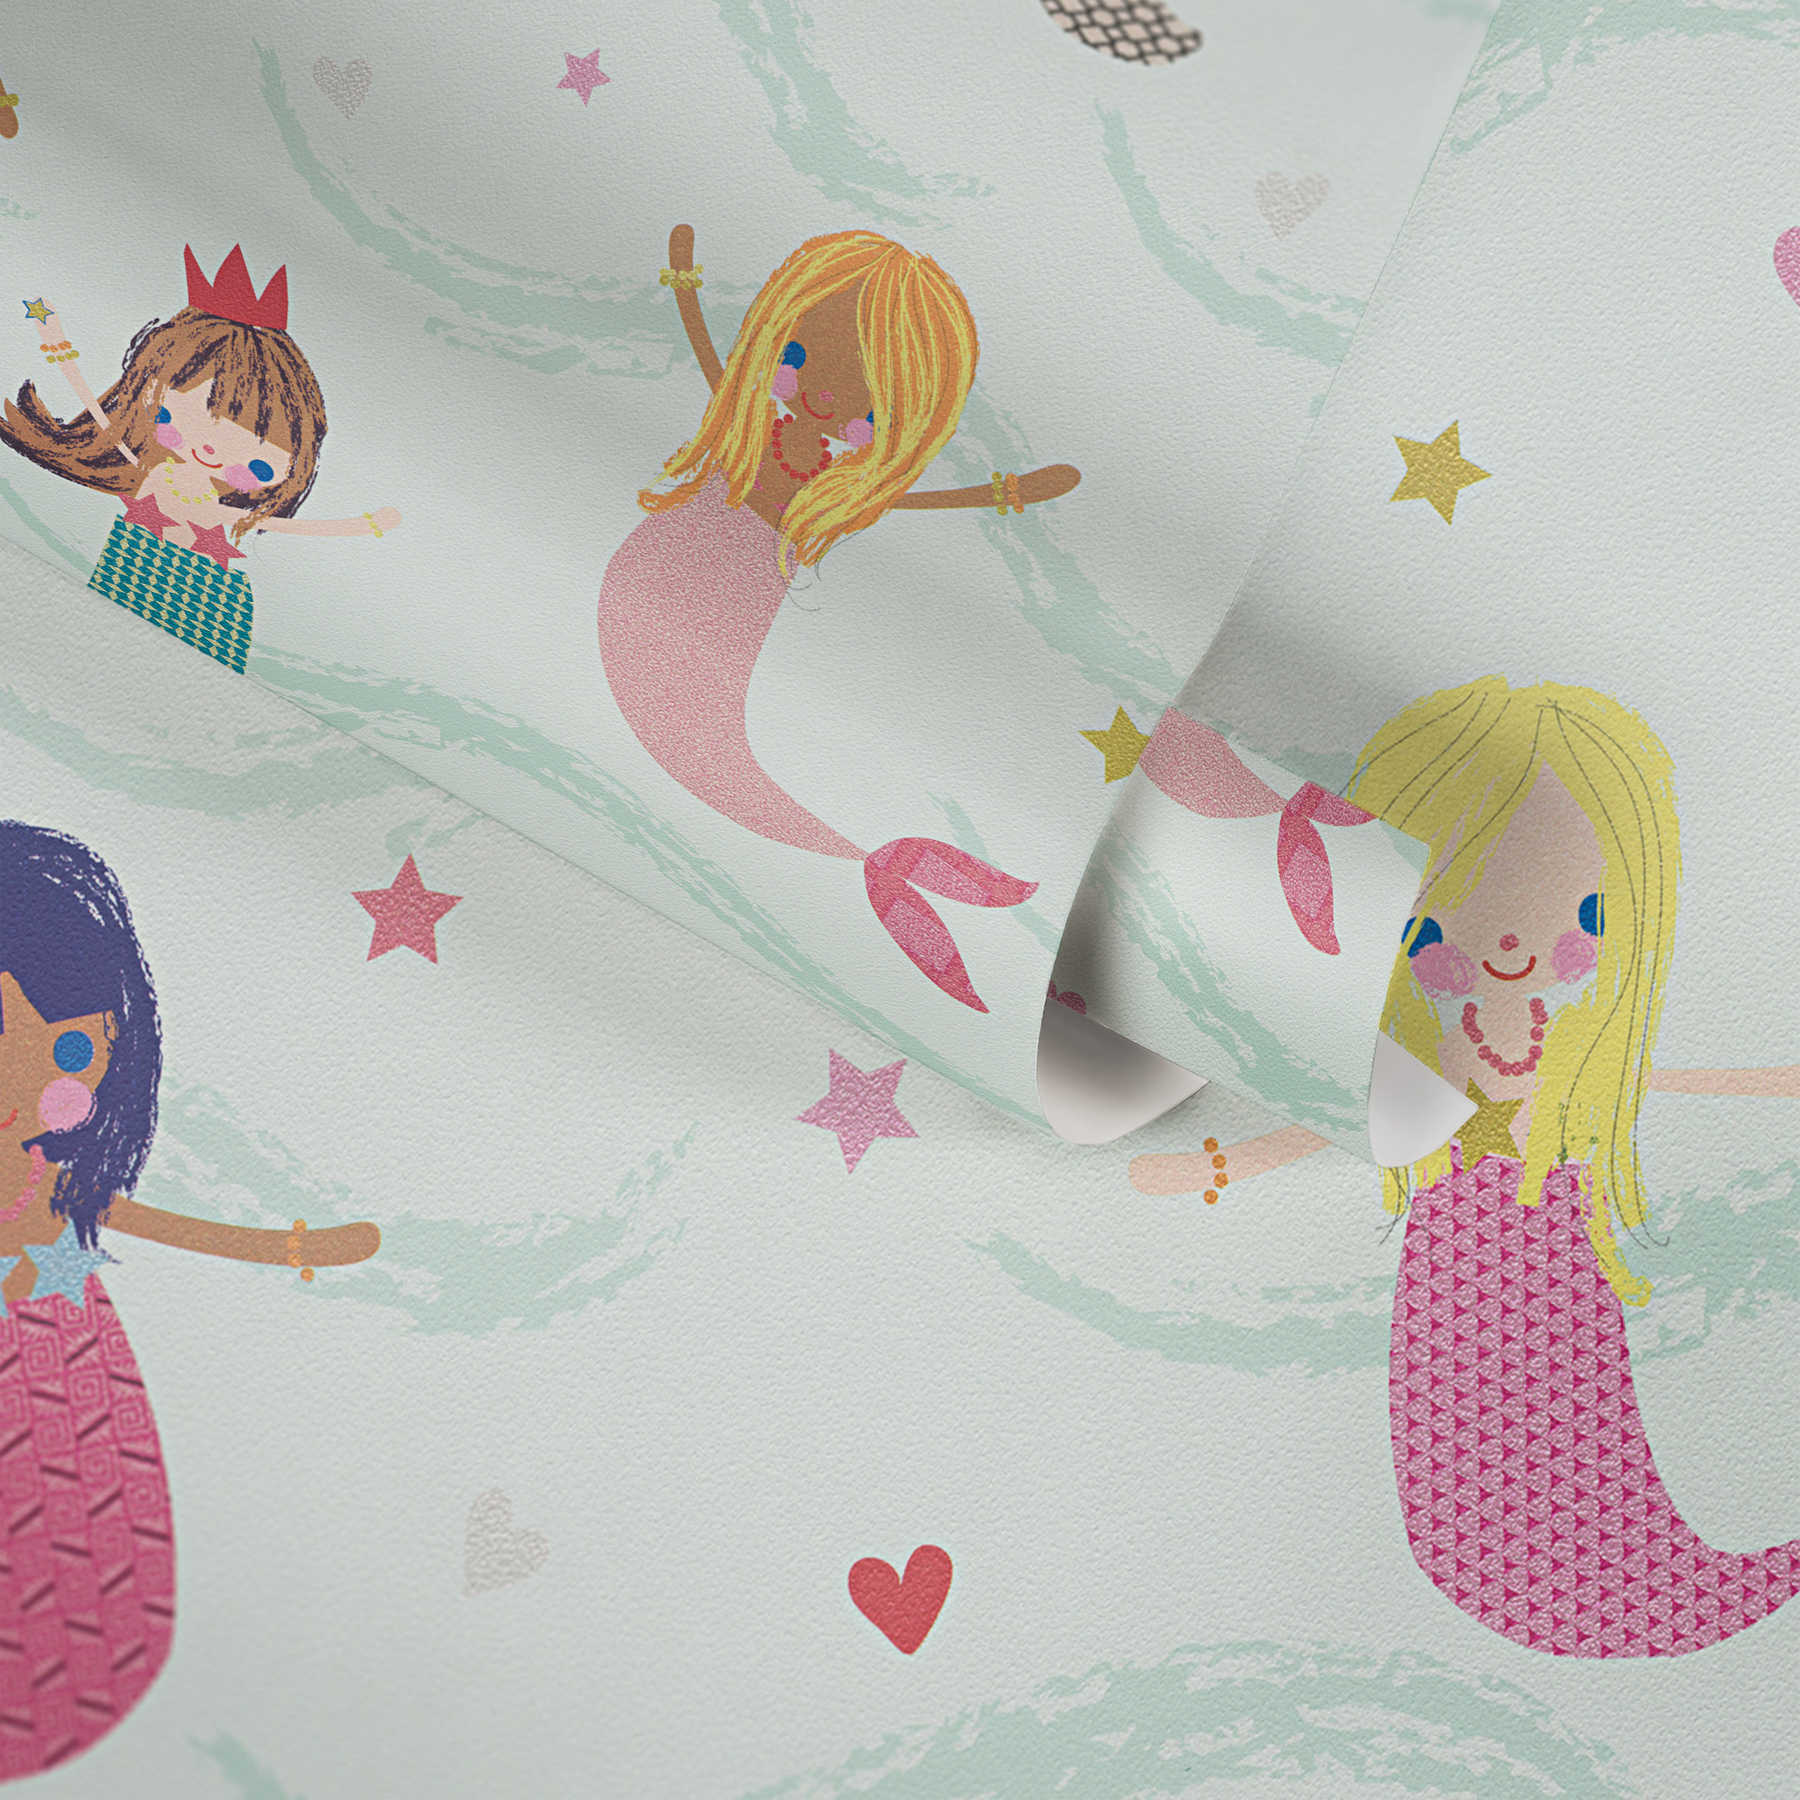             Kindertapete Meerjungfrau, fantasievolles Design – Bunt, Rosa, Grün
        